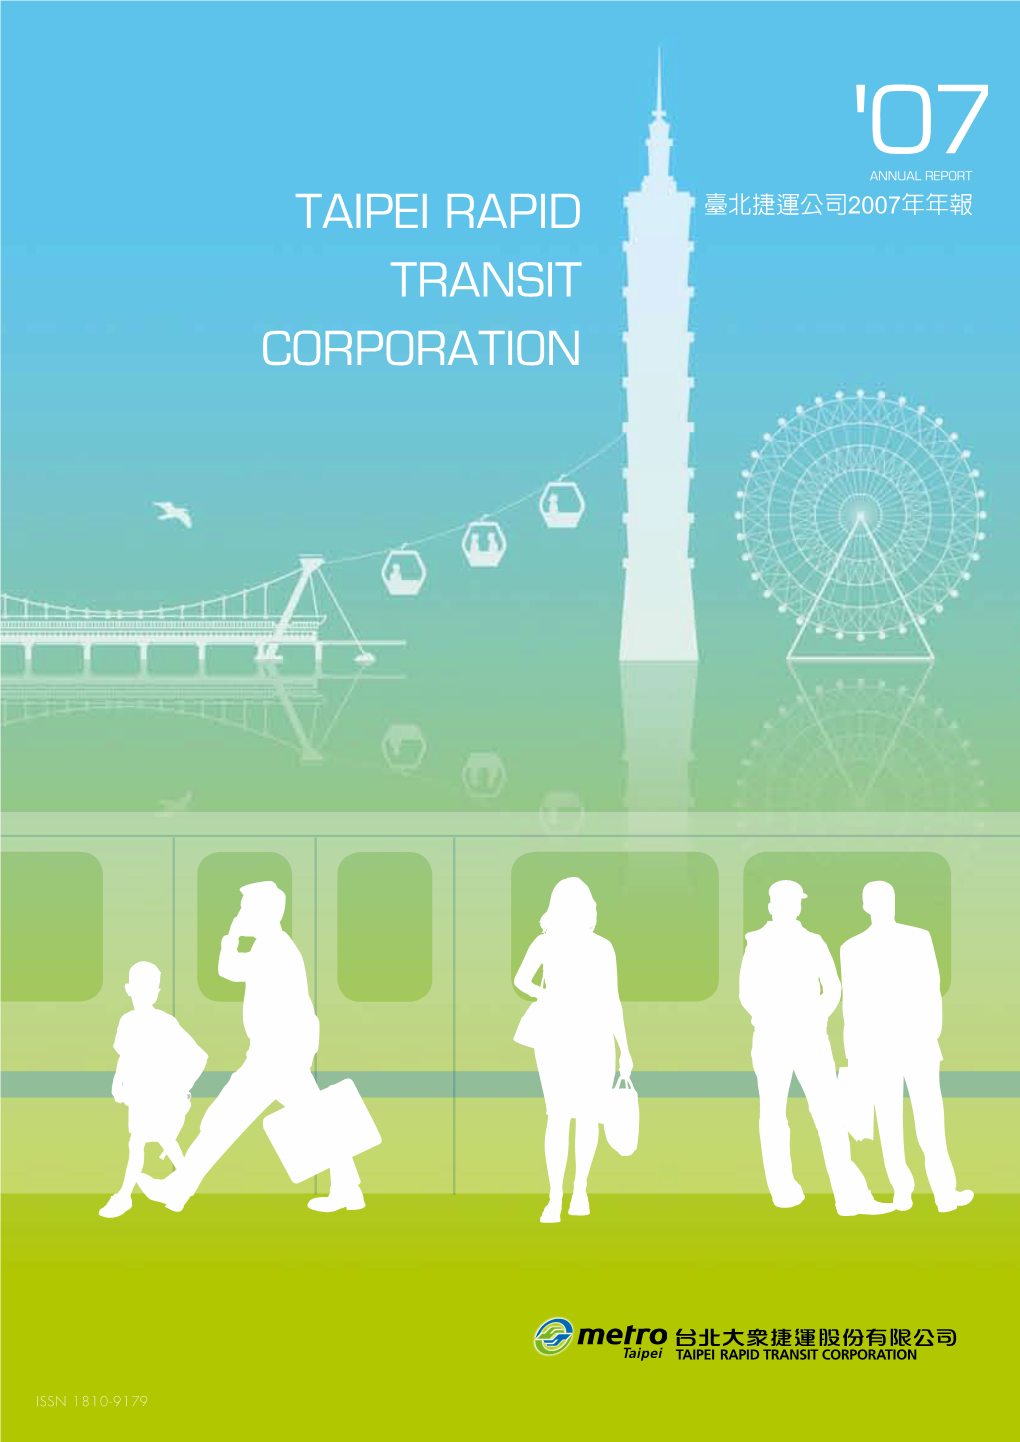 Taipei Rapid Transit Corporation